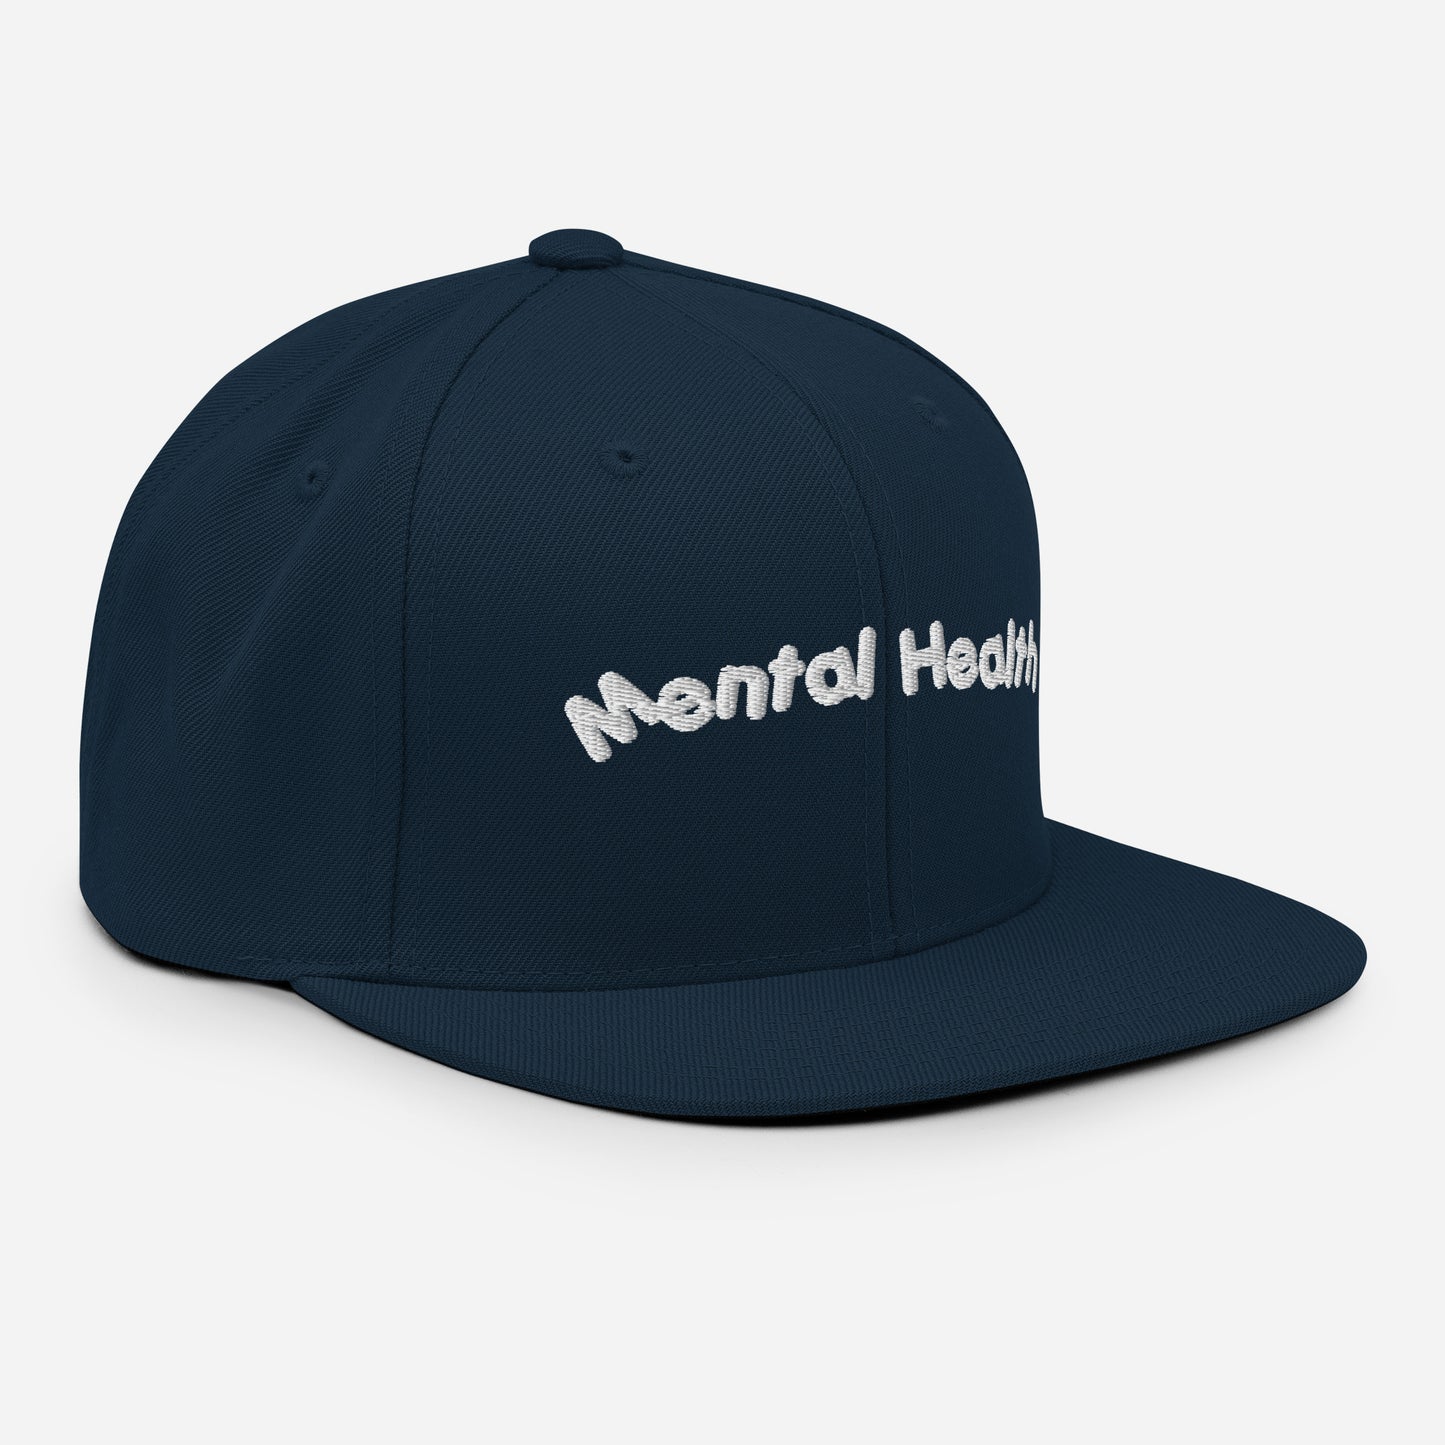 "Mental Health" Snapback Hat